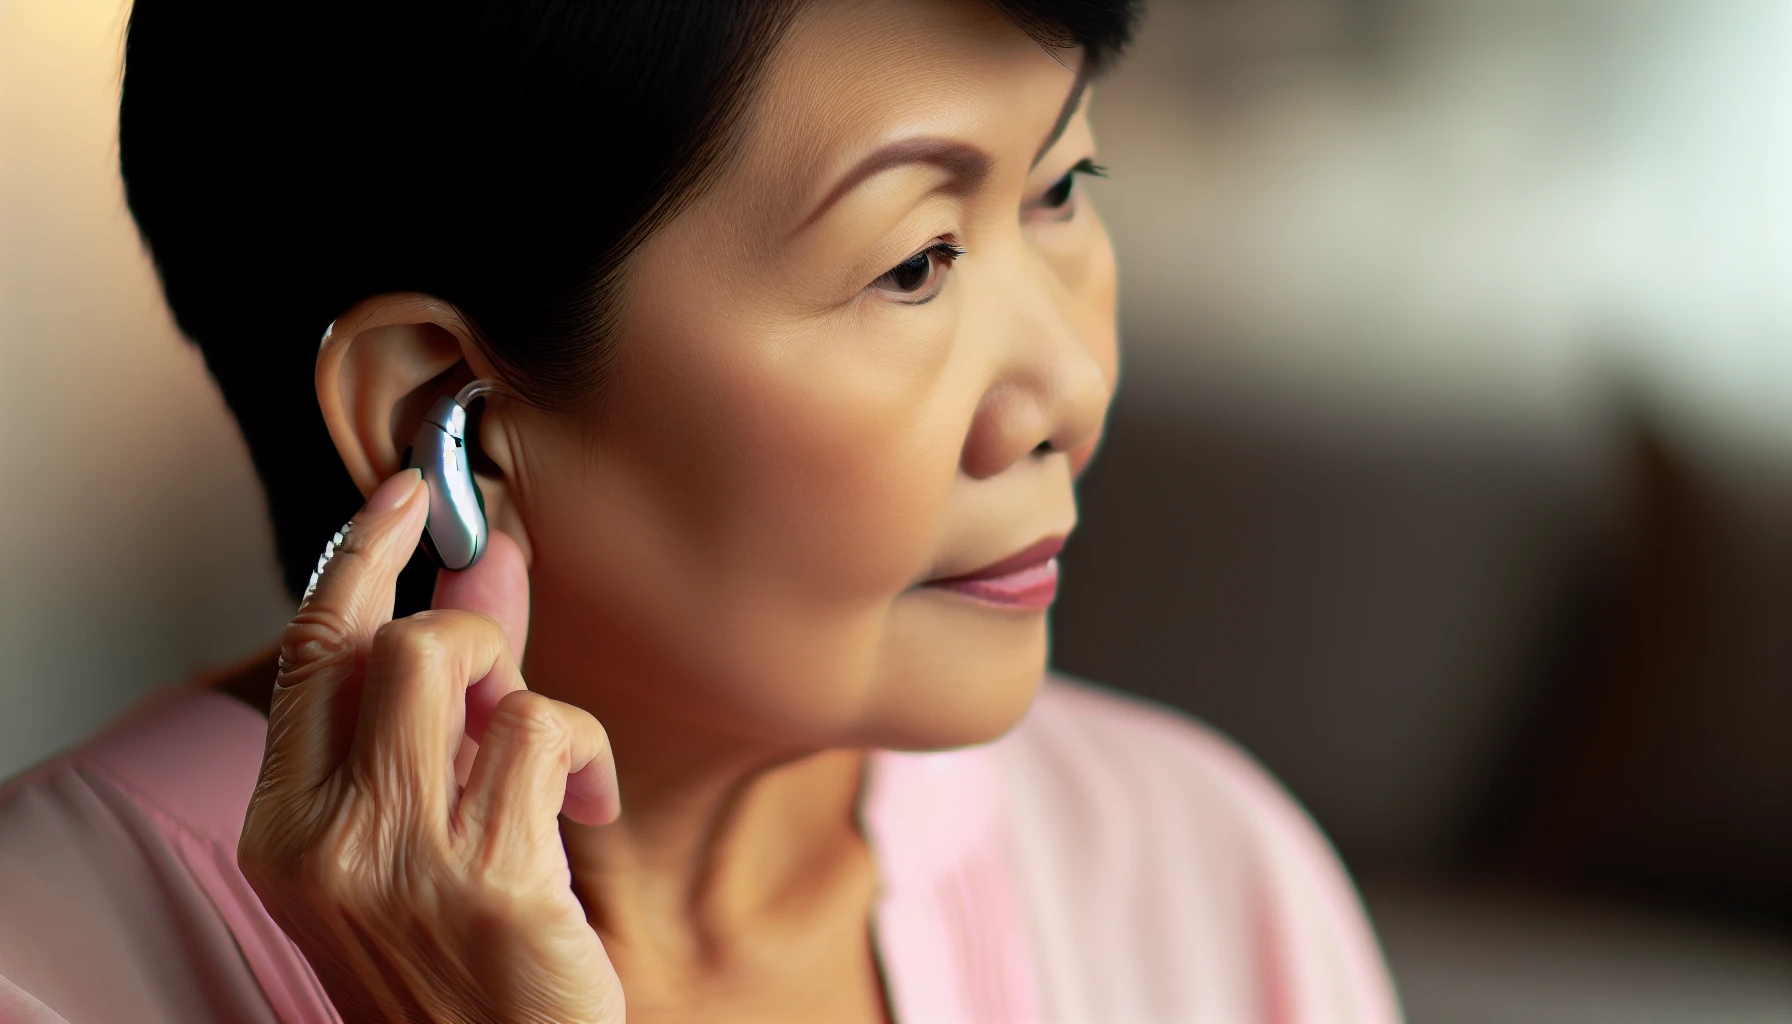 Woman adjusting hearing aid, exploring tinnitus treatment options